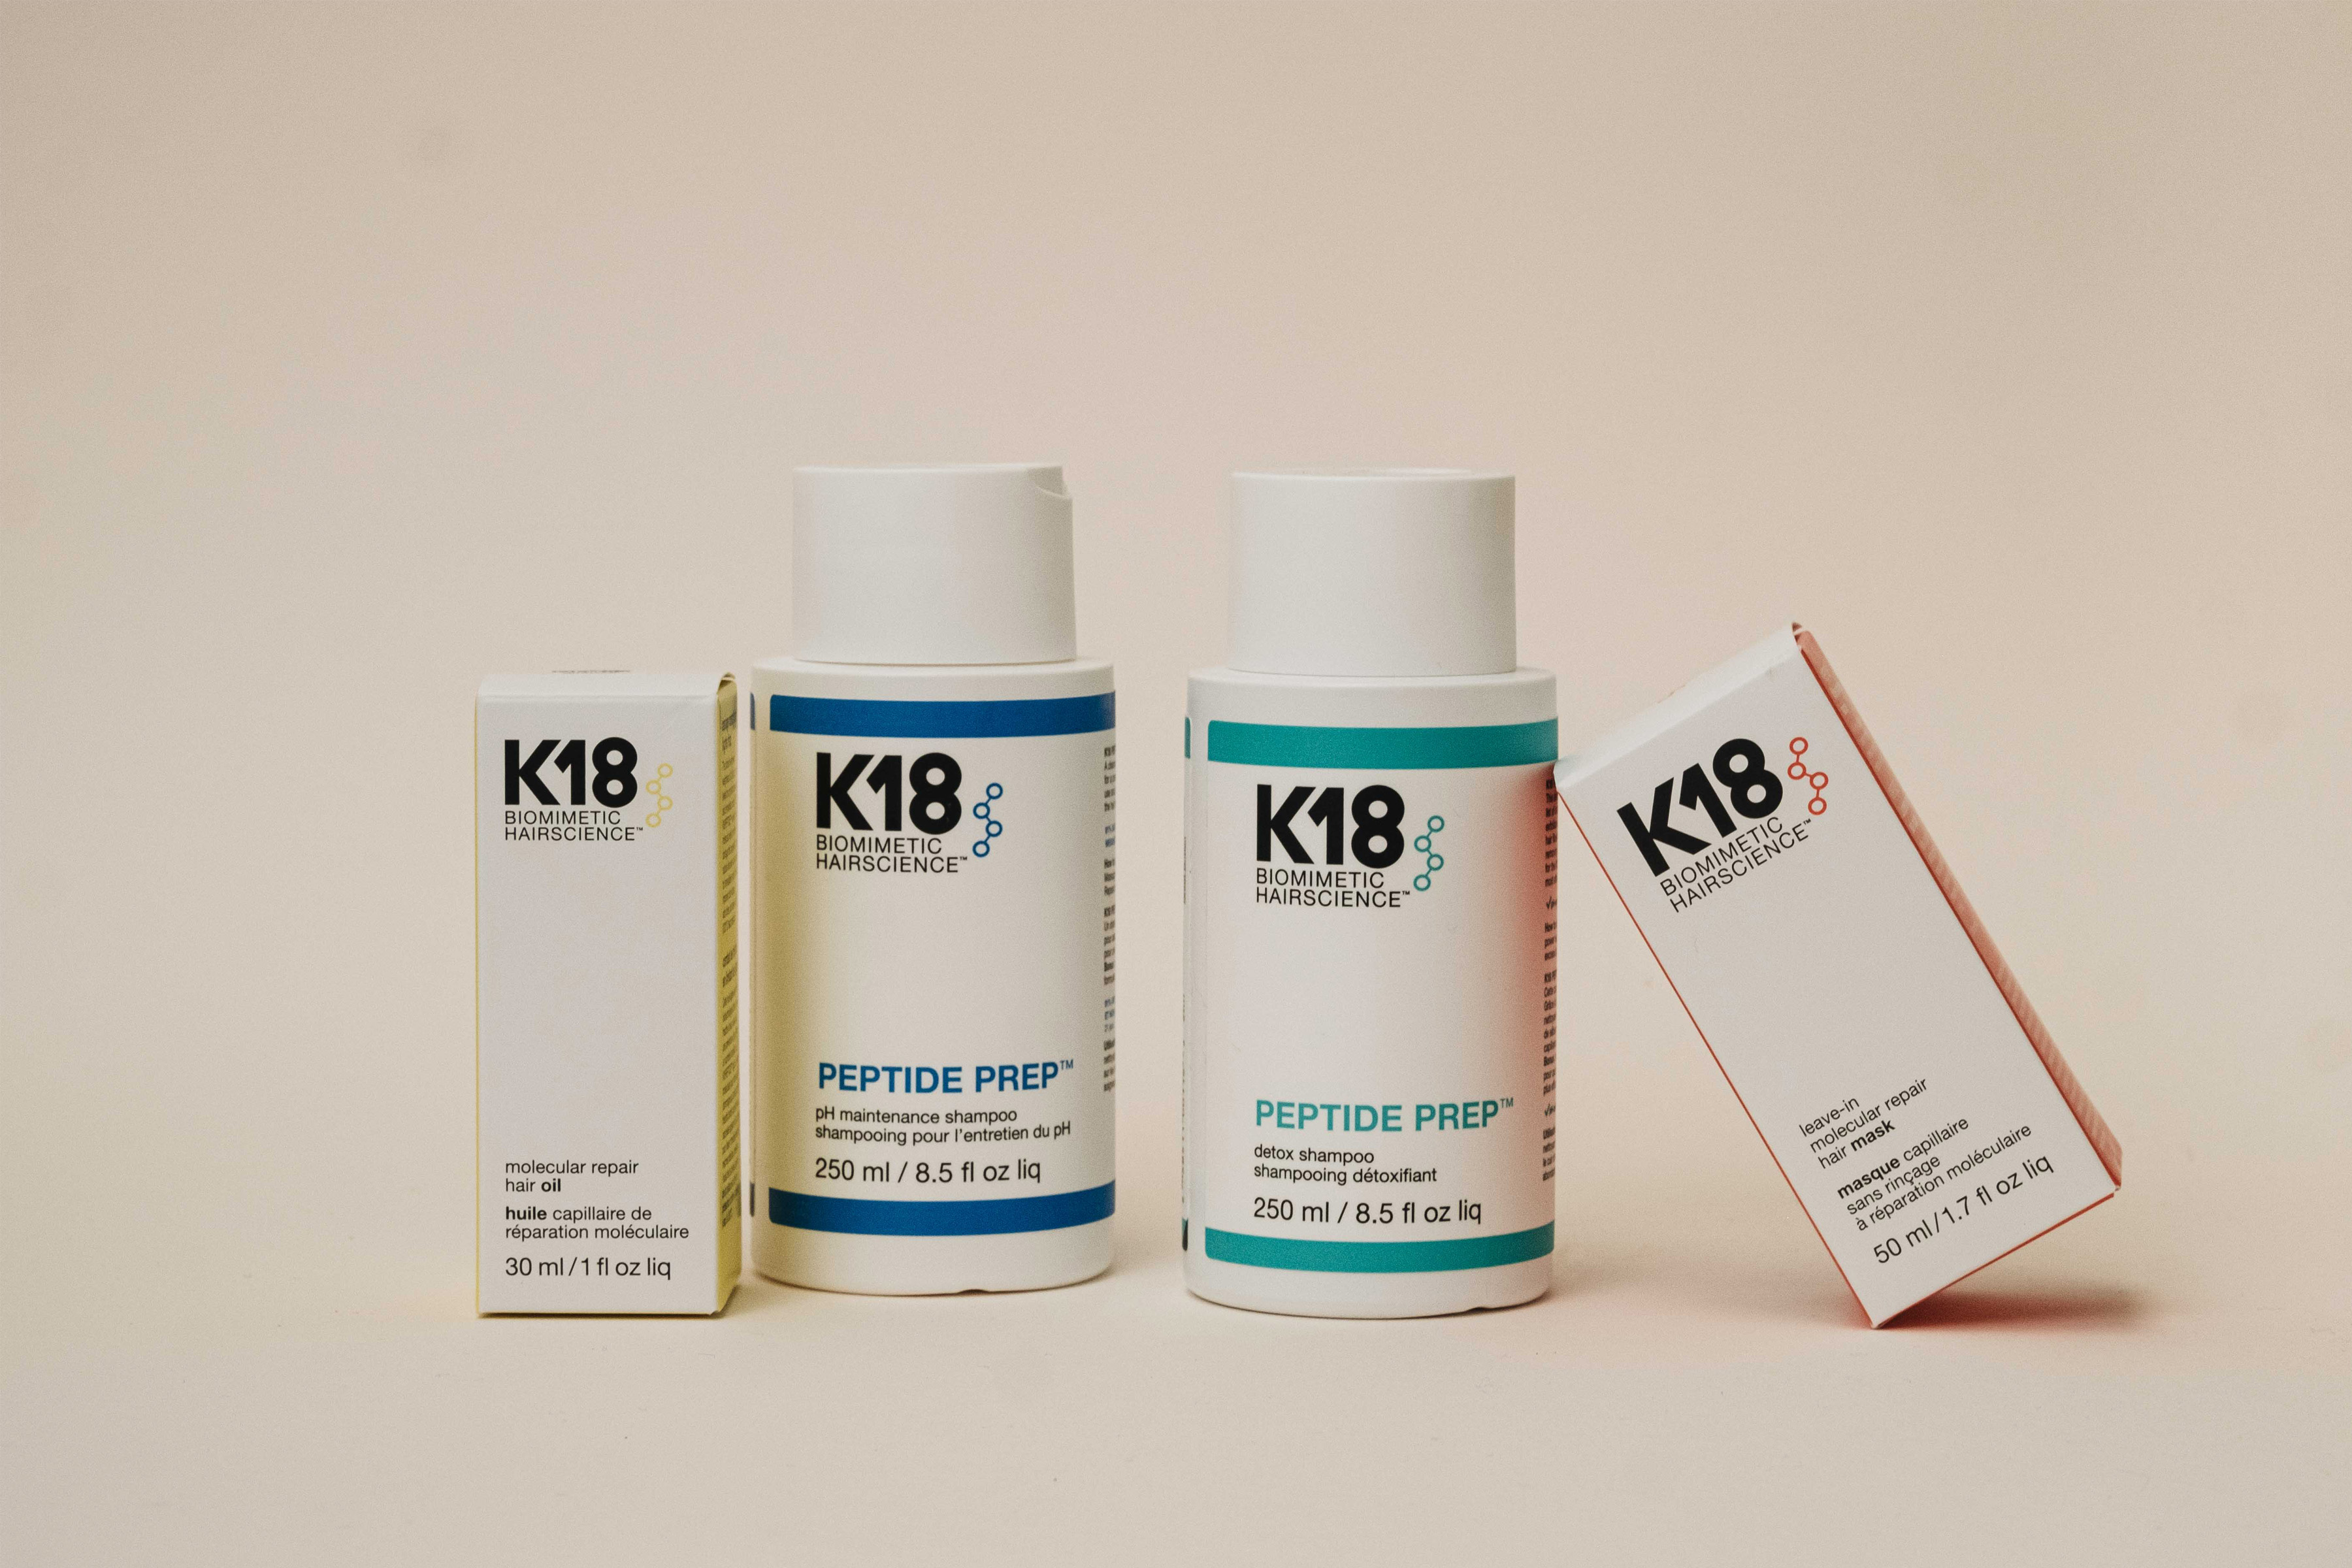 K18 Biomimetic Hairscience